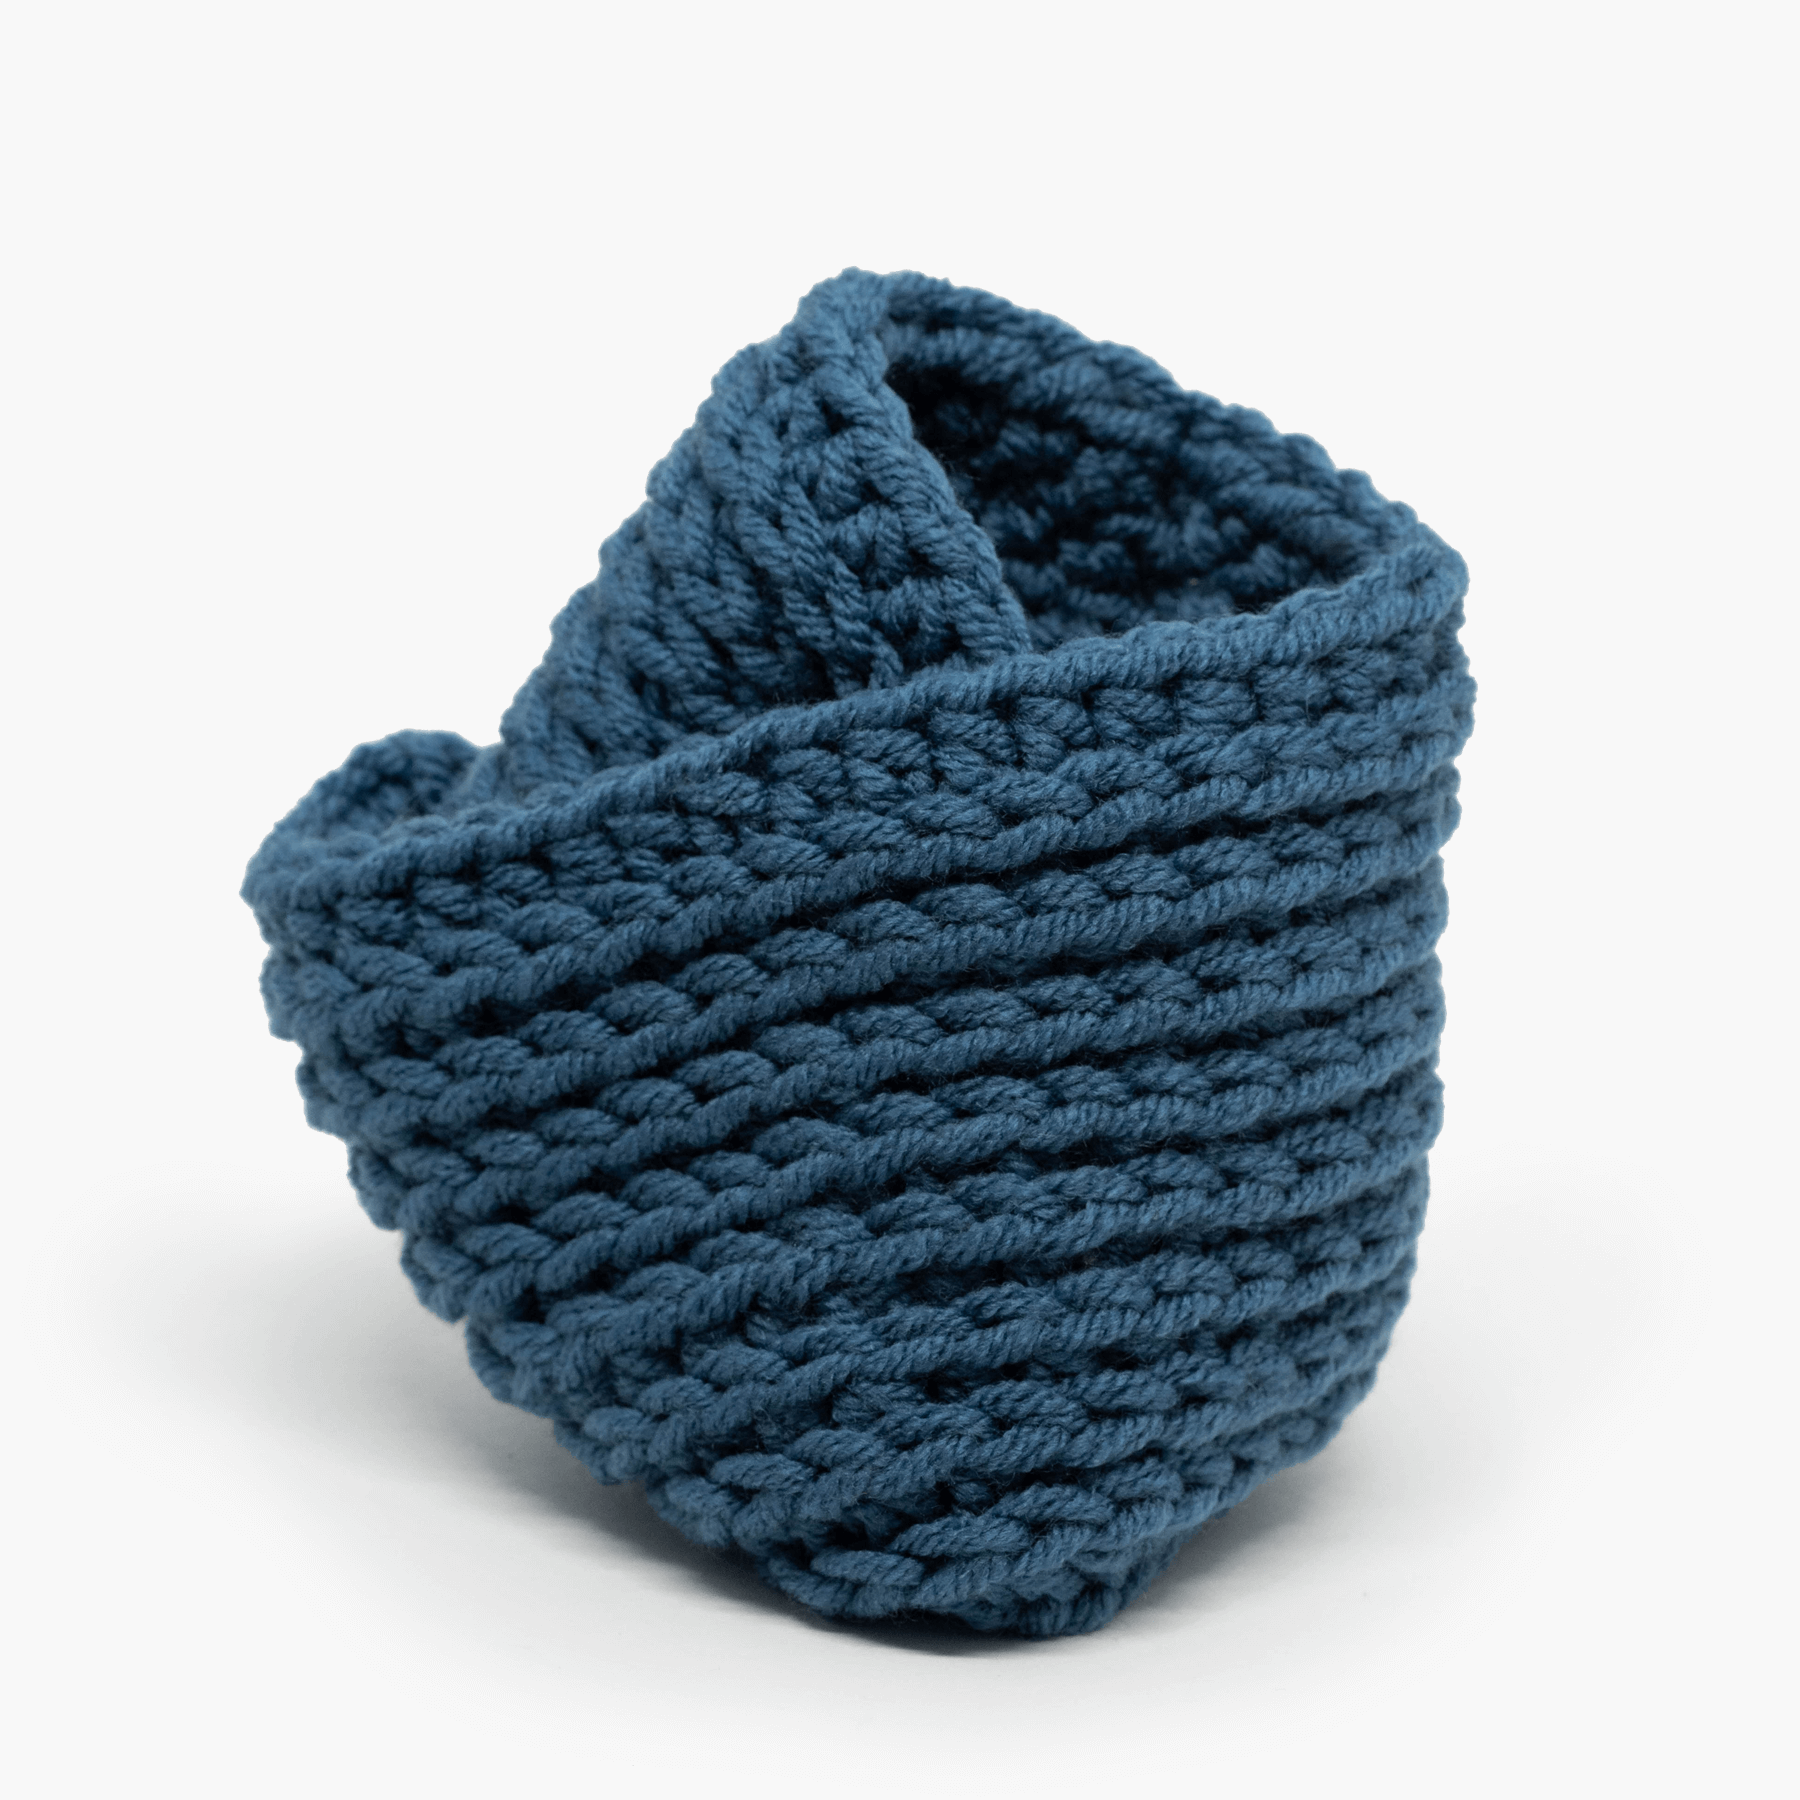 Gola tricot dupla - Oceano